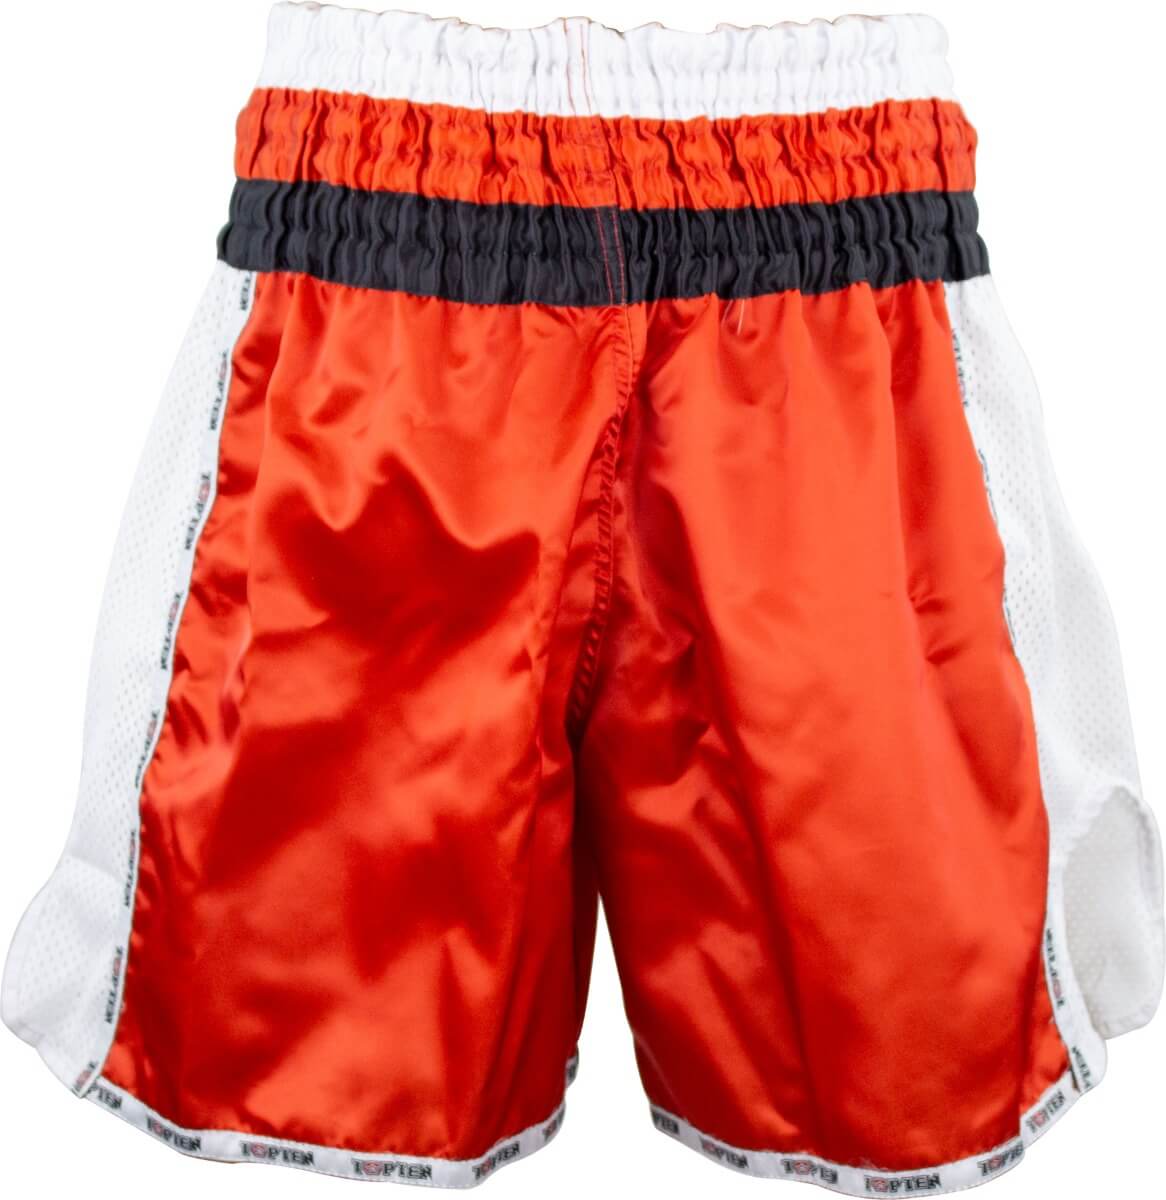 top-ten-kickboxing-shorts-wako-star-red-18641-back